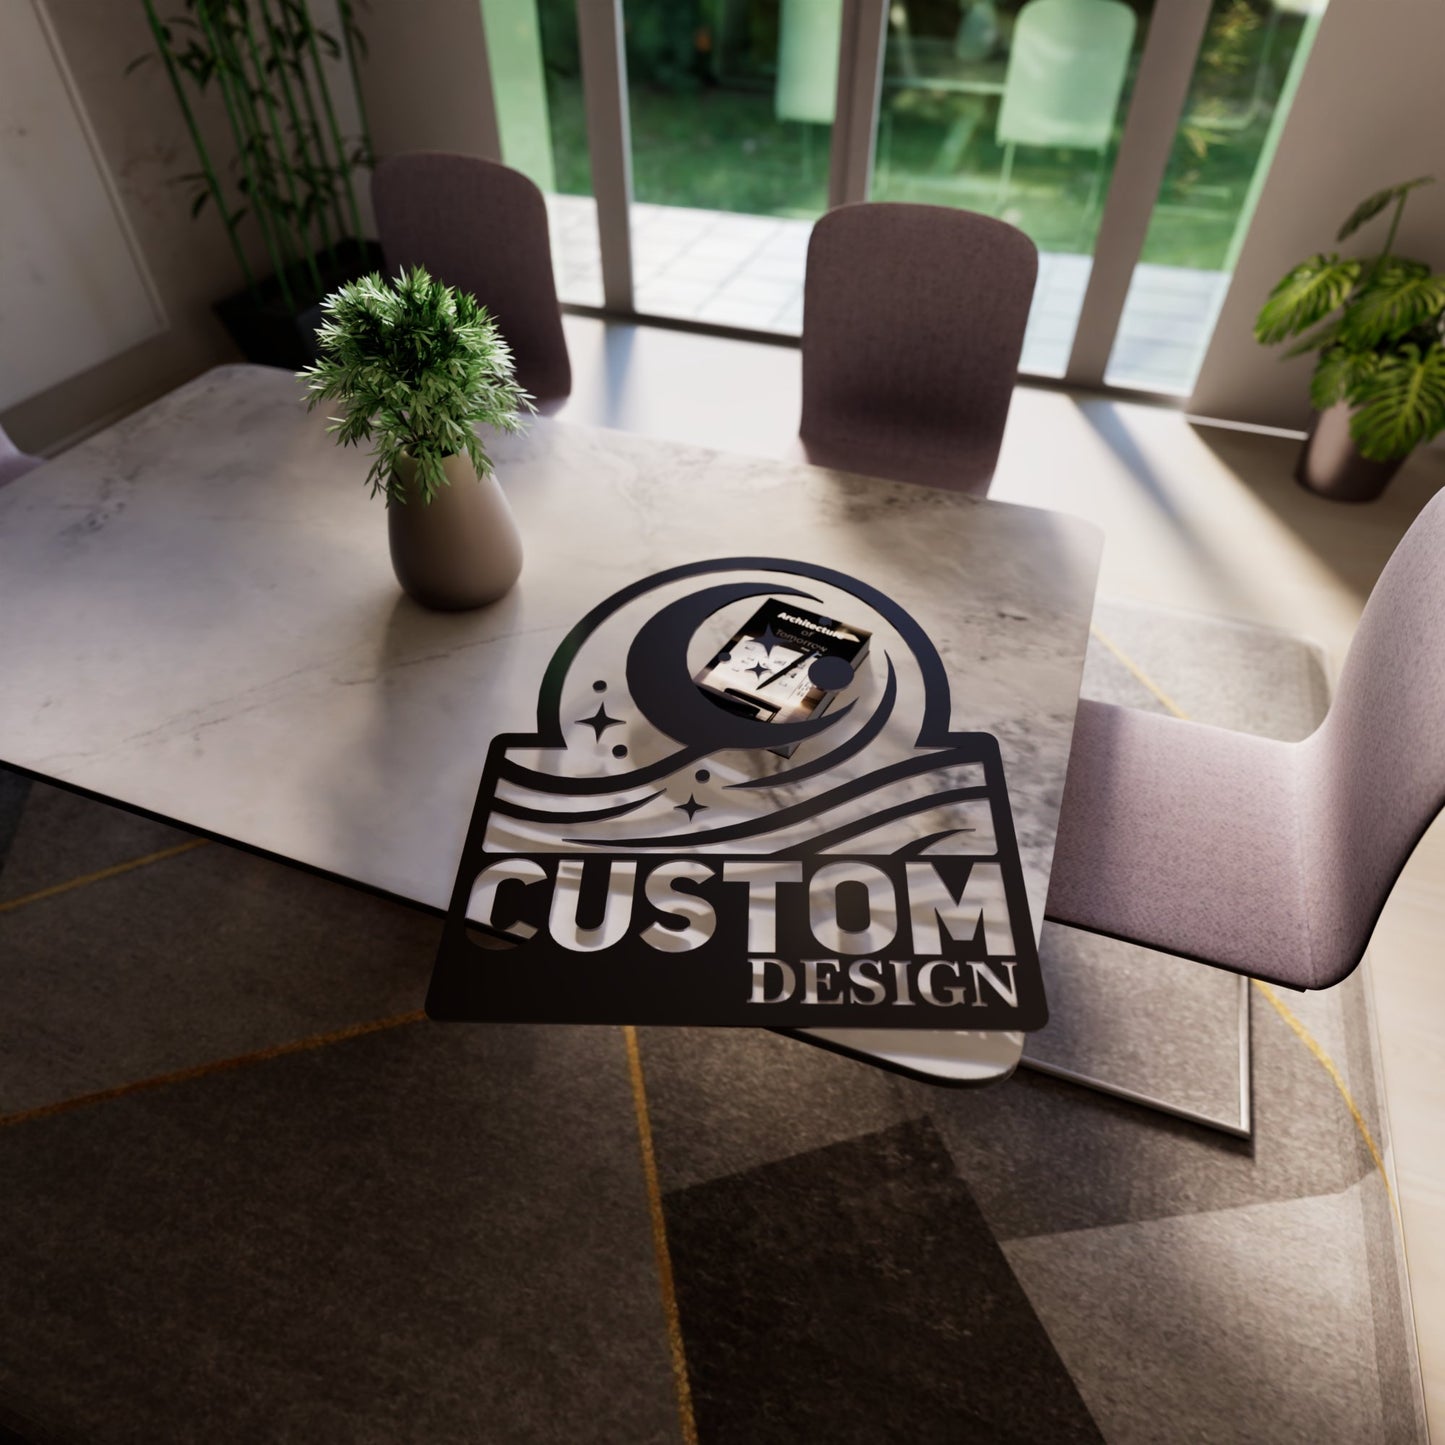 Custom Logo Design RGB Led Wall Sign - Kutalp